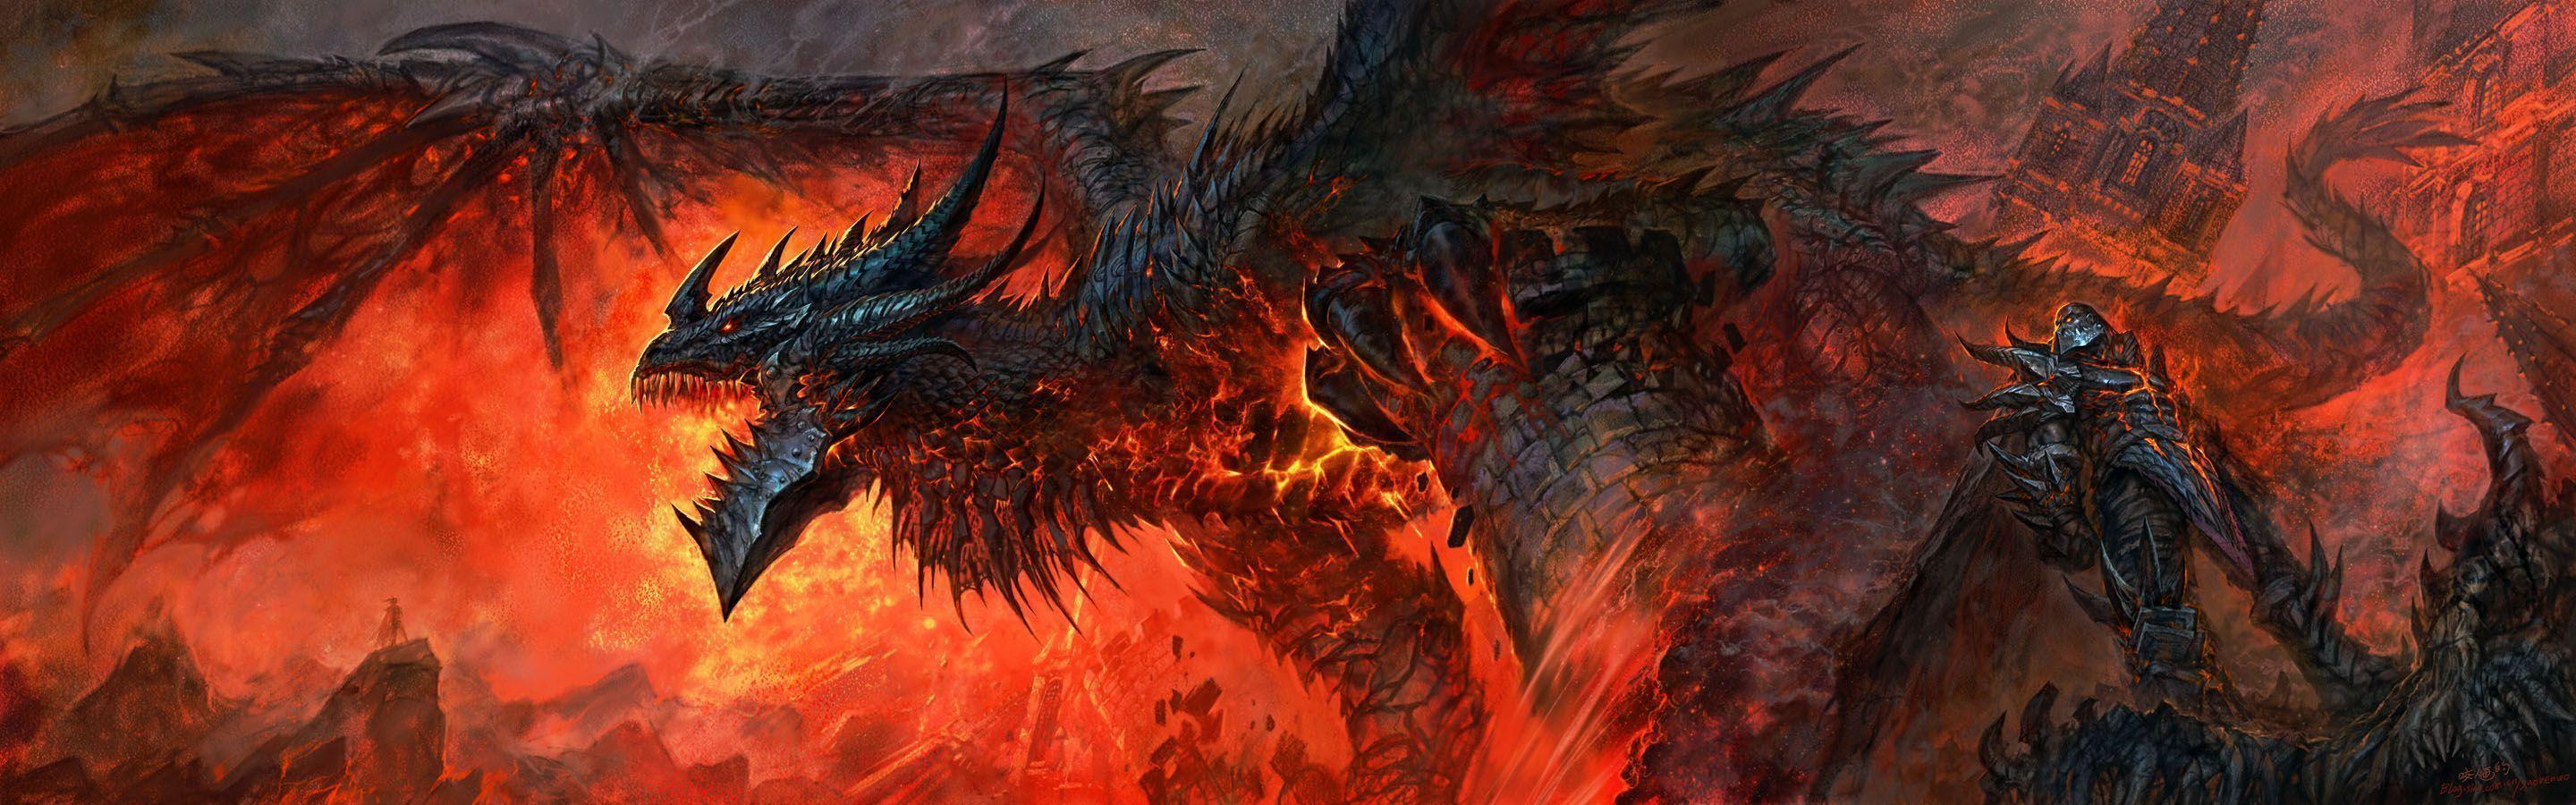 Download Dragons World Wallpaper 2880x900